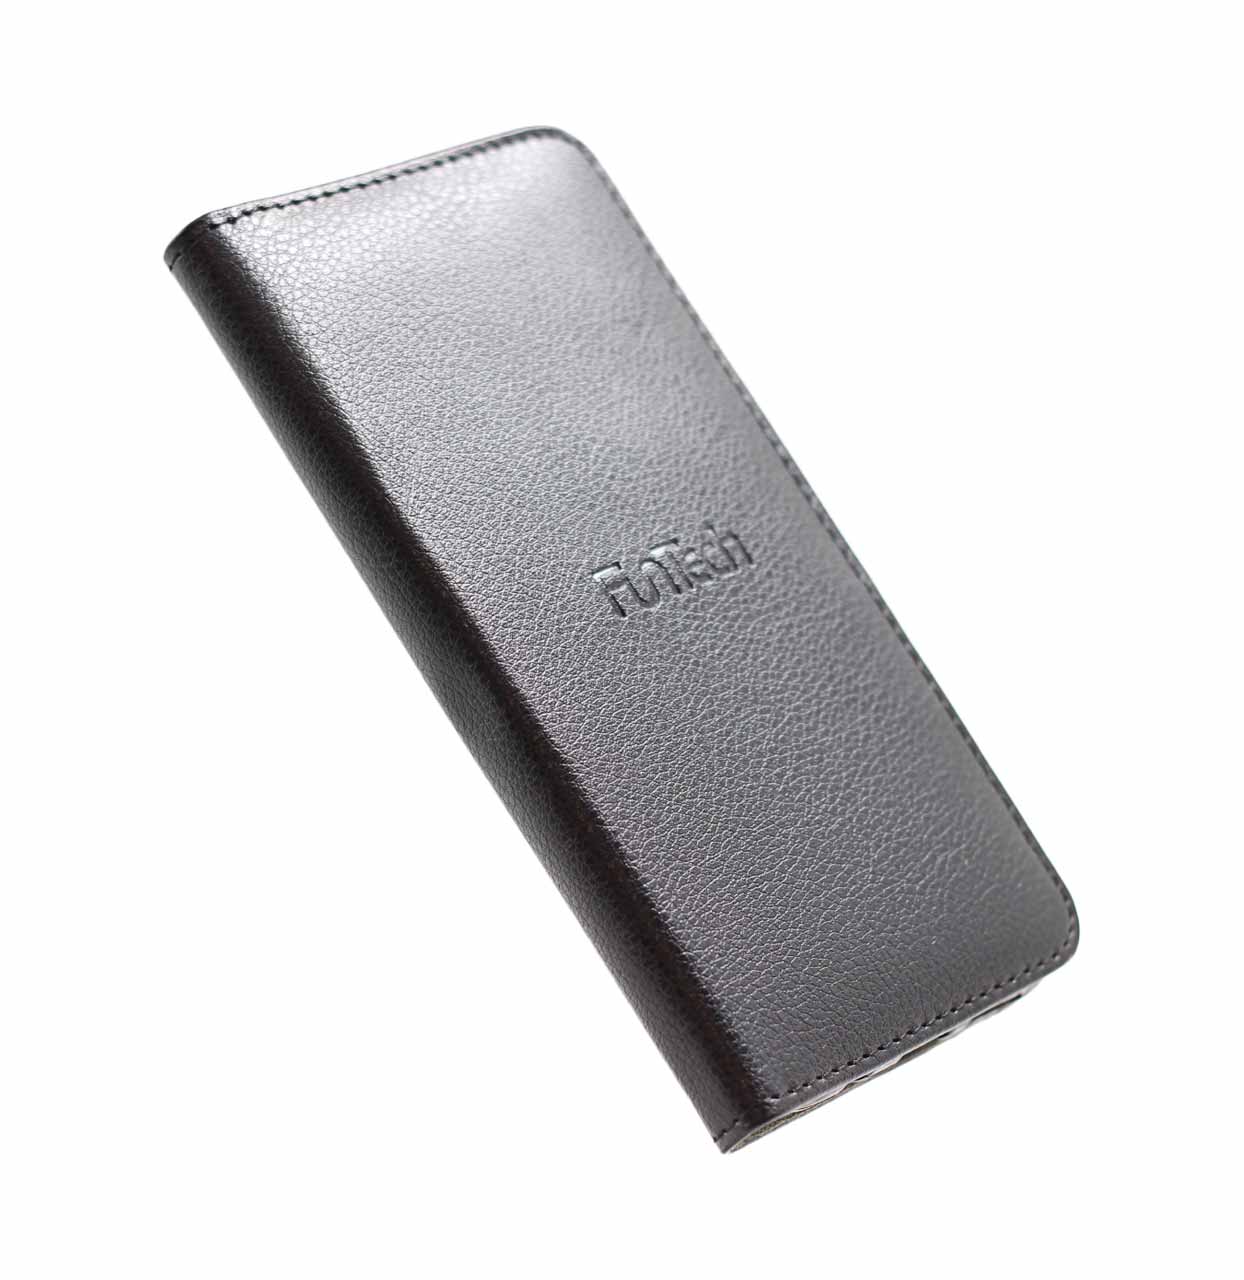 Samsung S8 Plus Leather Wallet Case Black